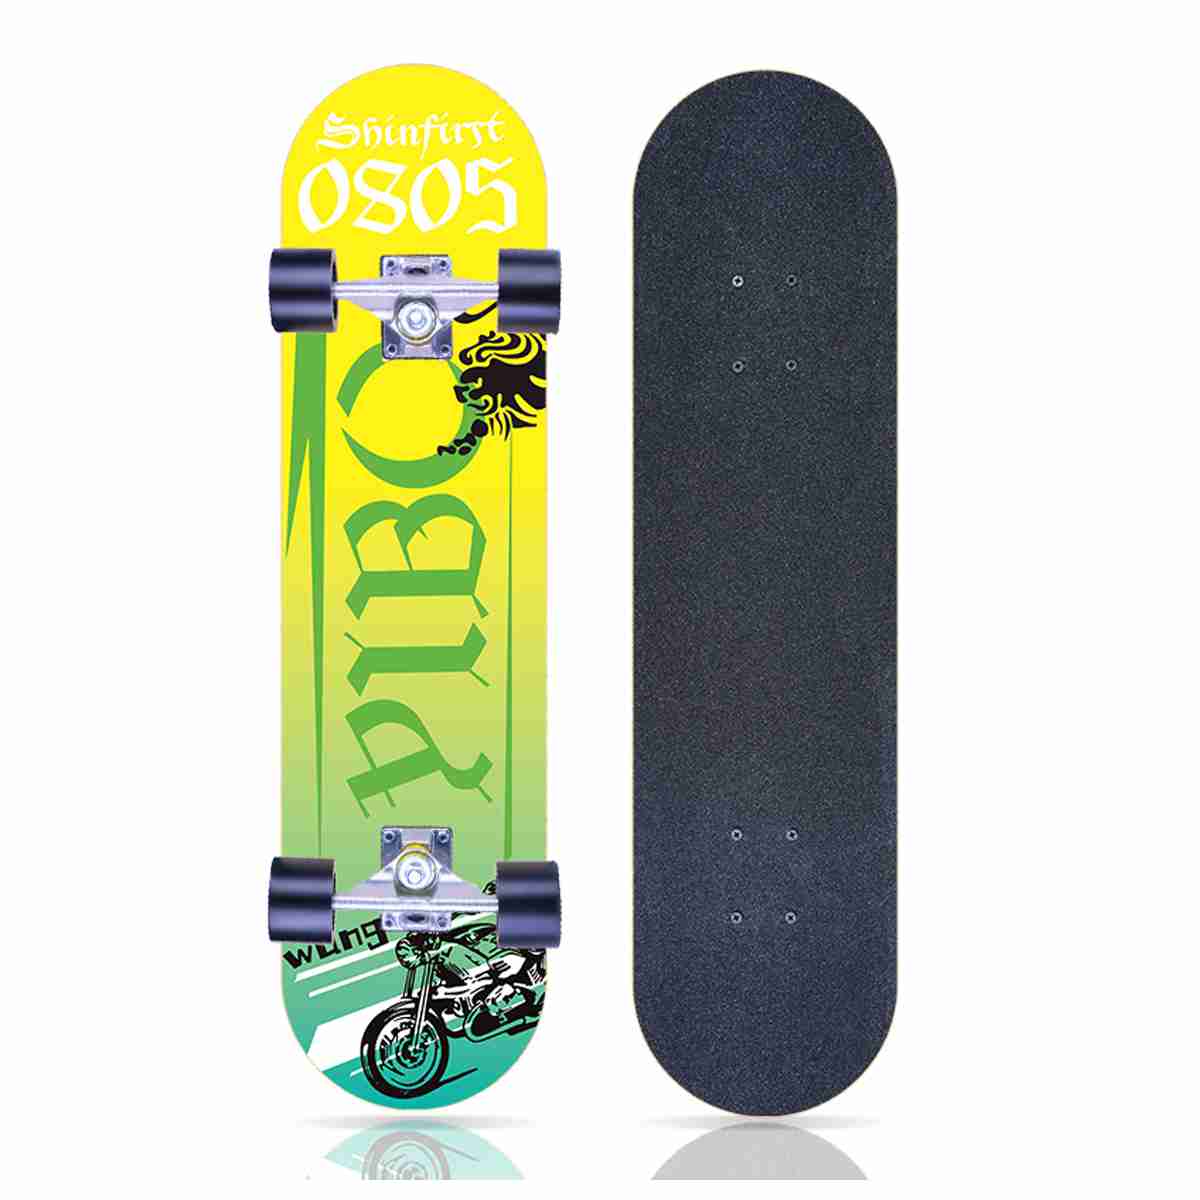 skate-board-patinetas-patineta-skateboard-standard-complete with cash back rebate